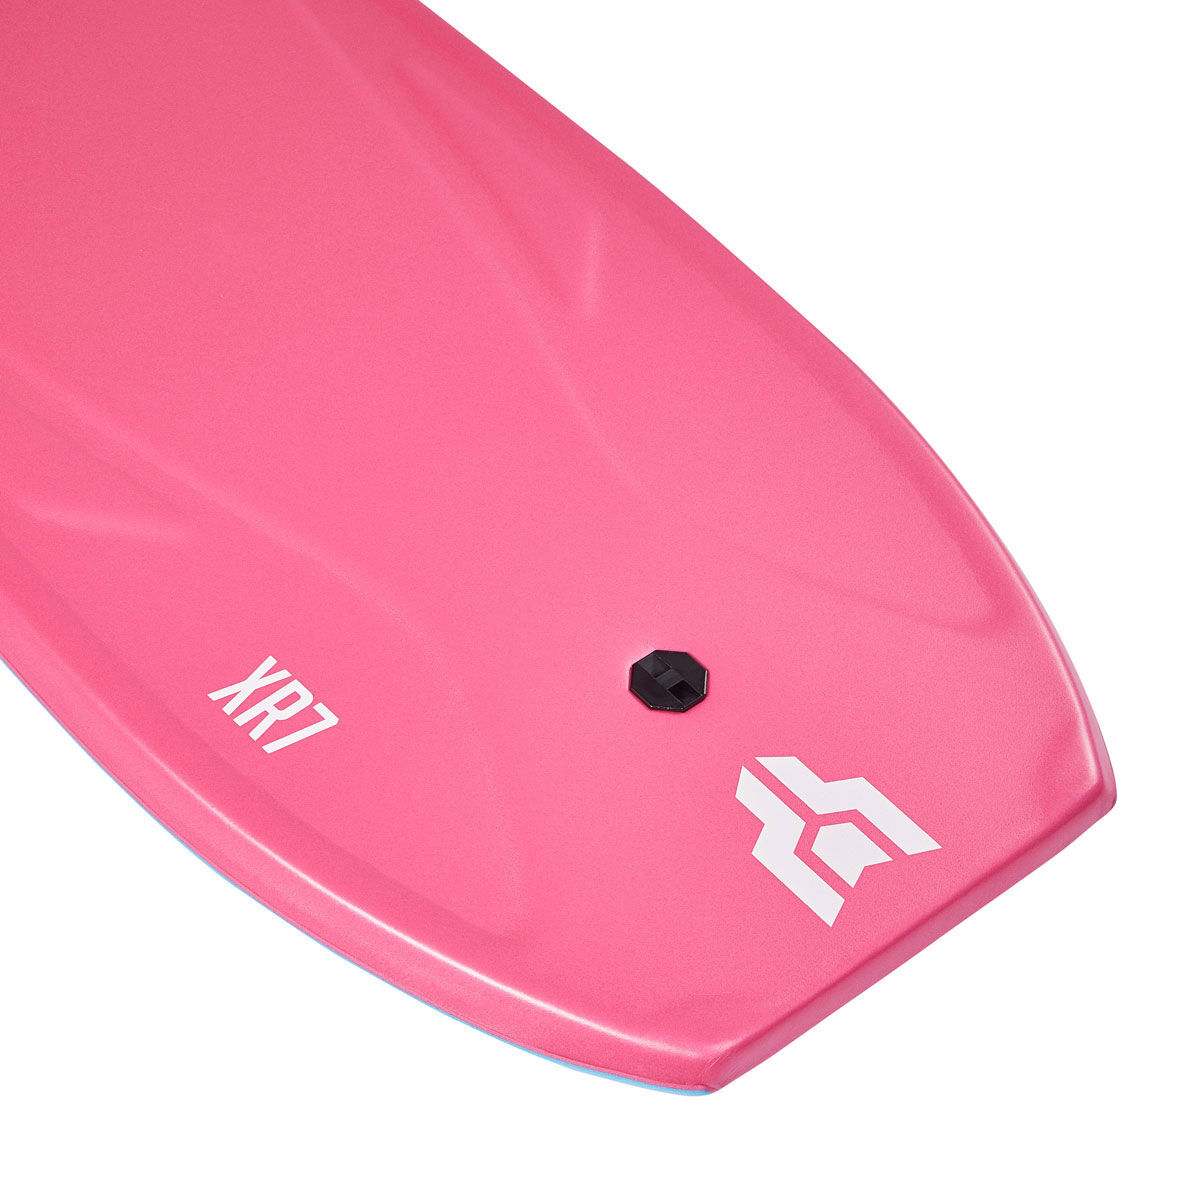 Tahwalhi XR7 Bodyboard Pink 42in, Pink, rebel_hi-res